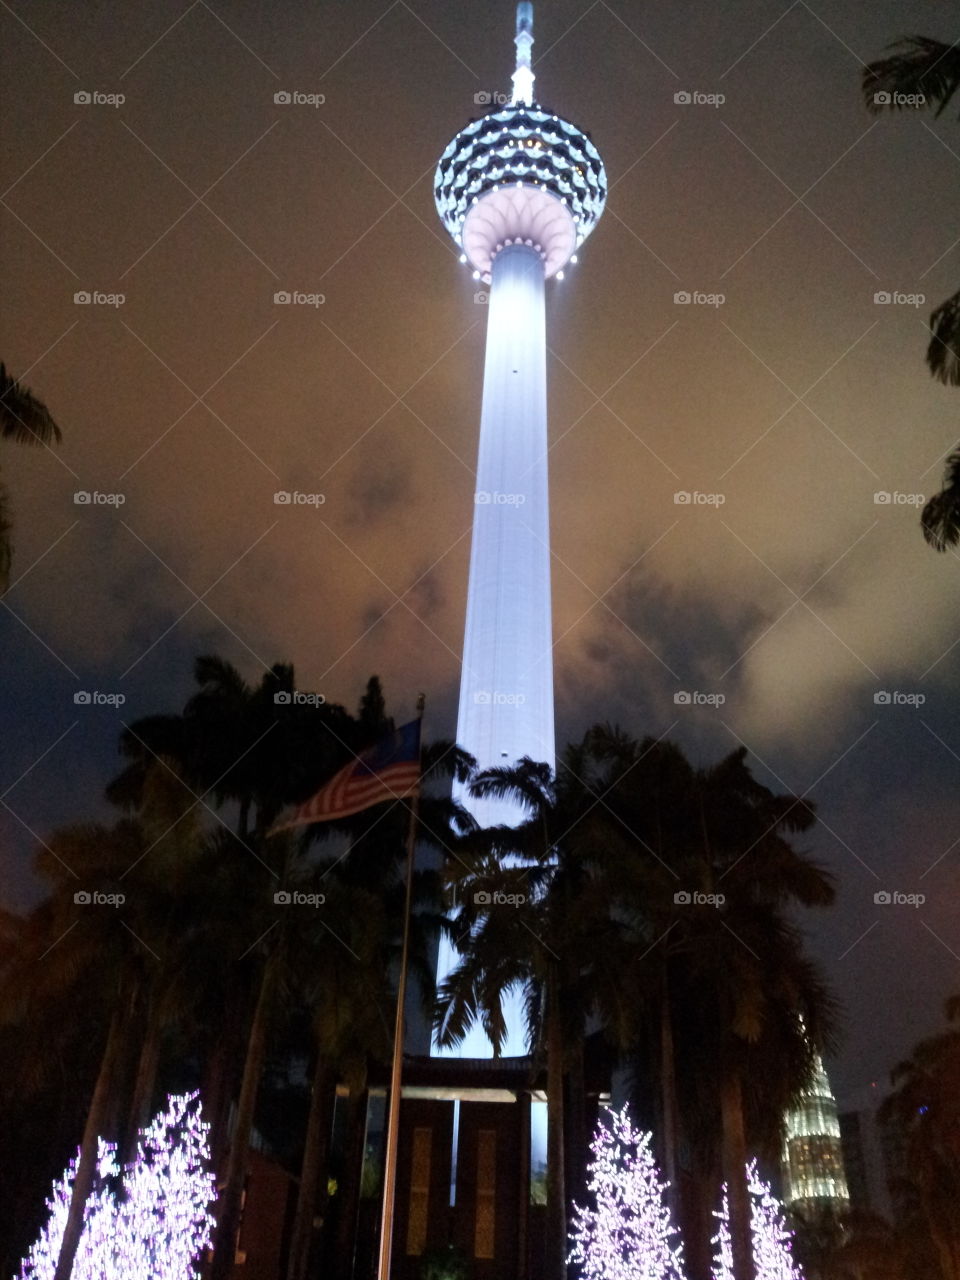 The lighting tower. The lighting tower in Kuala Lumpur-Malaysia